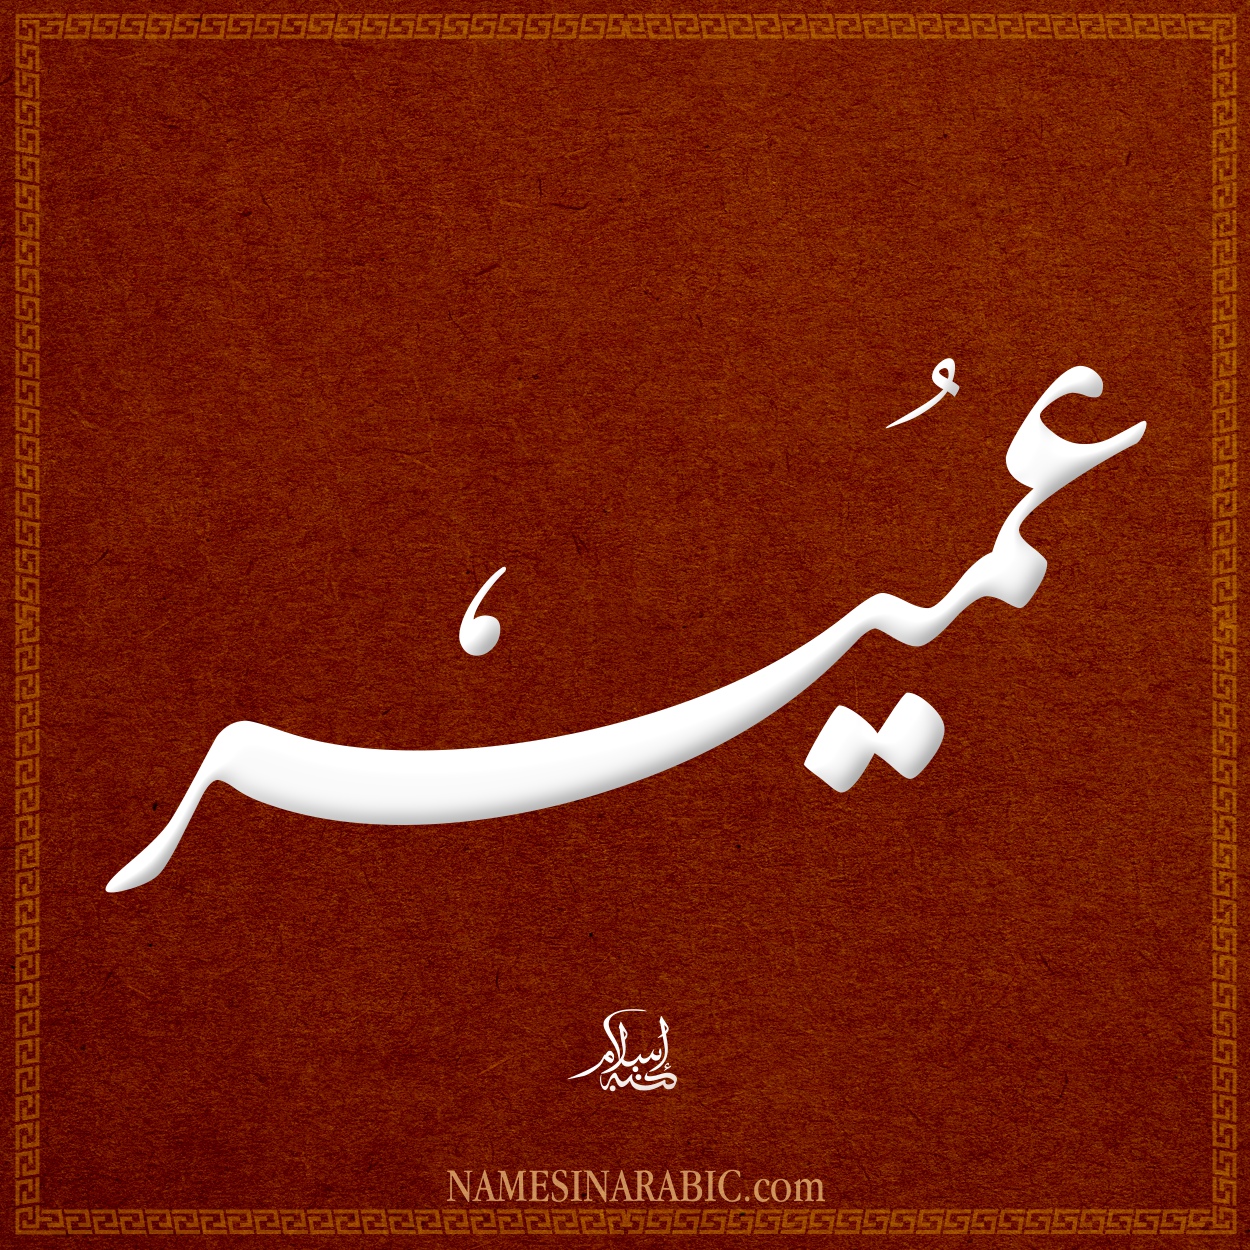 Umair-Name-in-Arabic-Nastaliq-Persian-Calligraphy.jpg